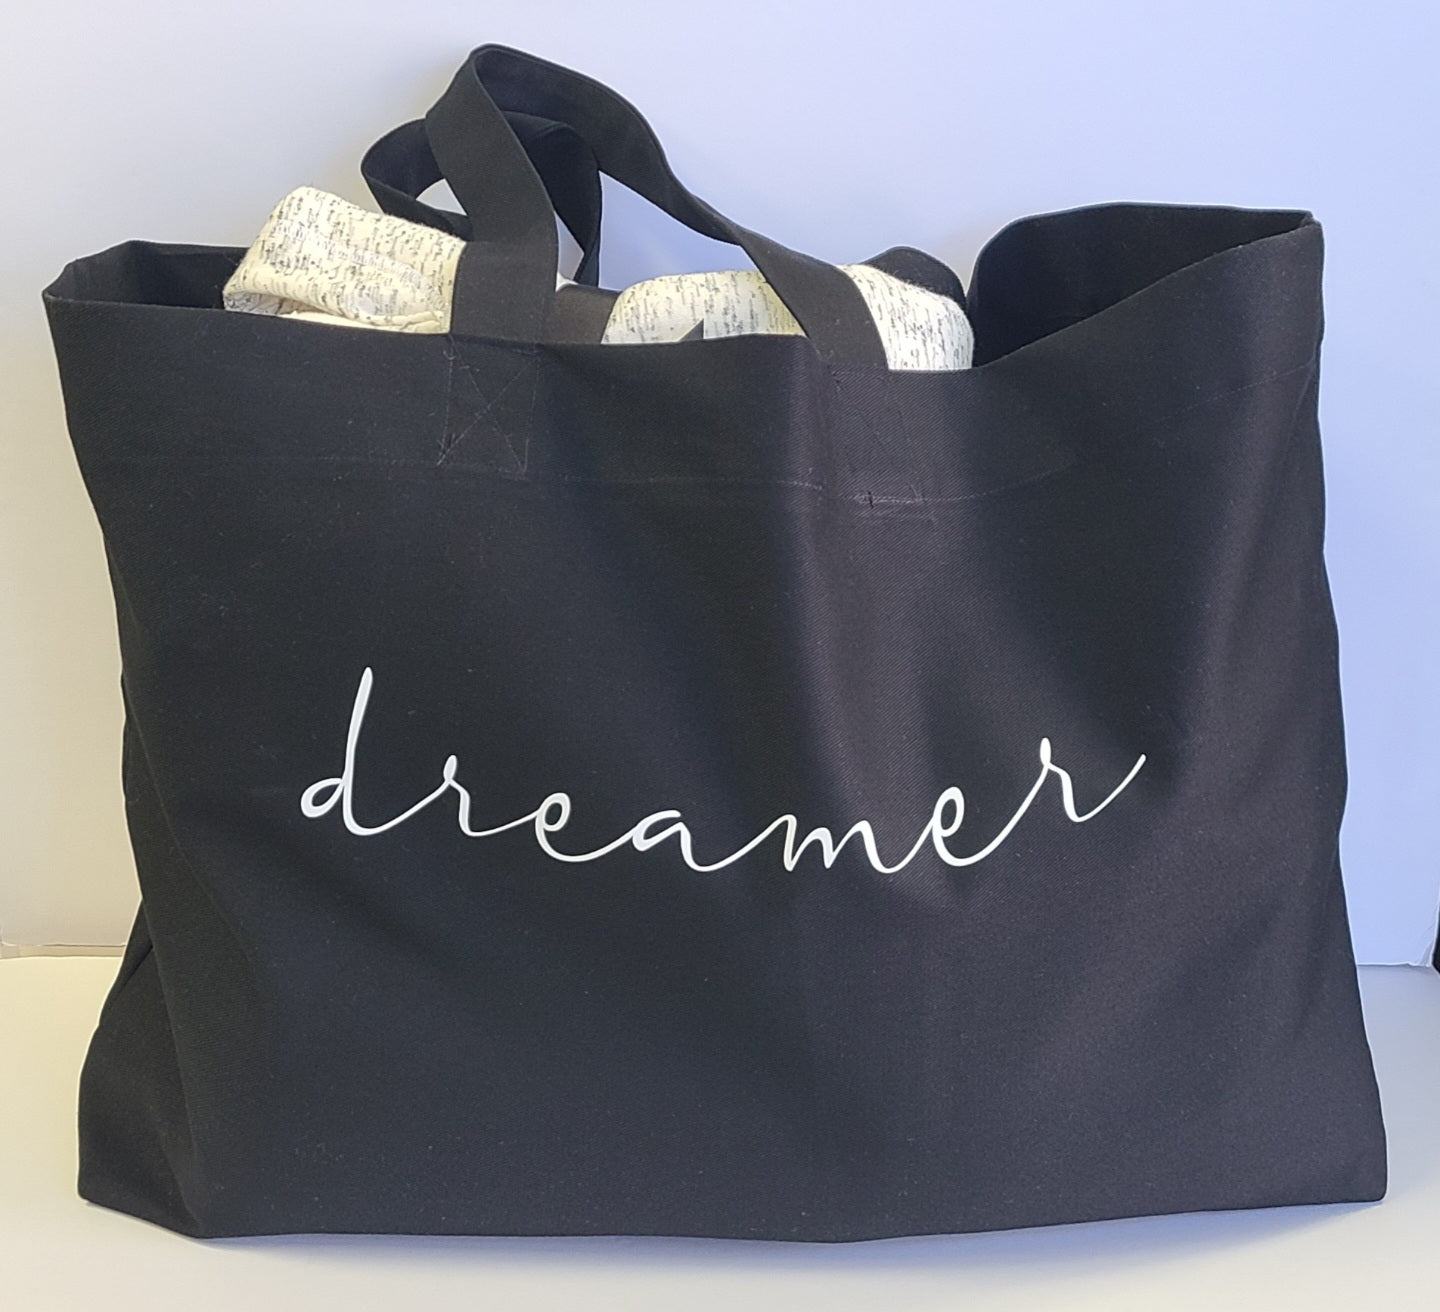 Dreamer Tote Bag Black